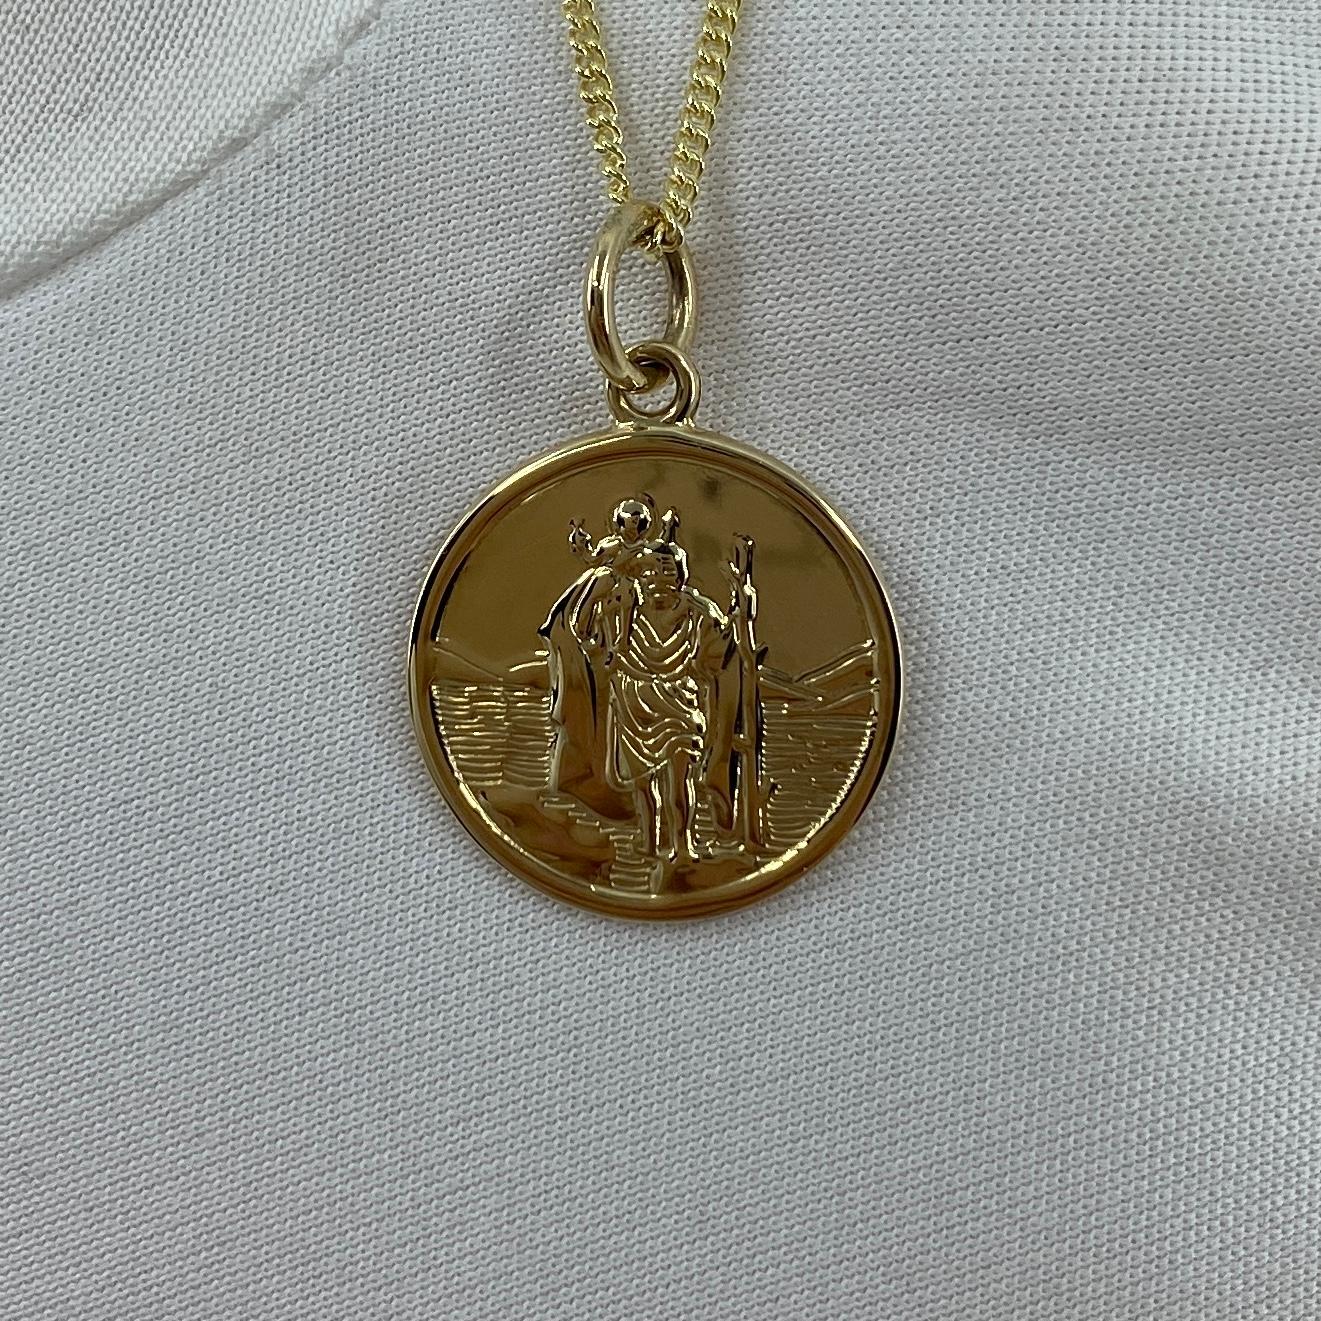 santo nino gold pendant